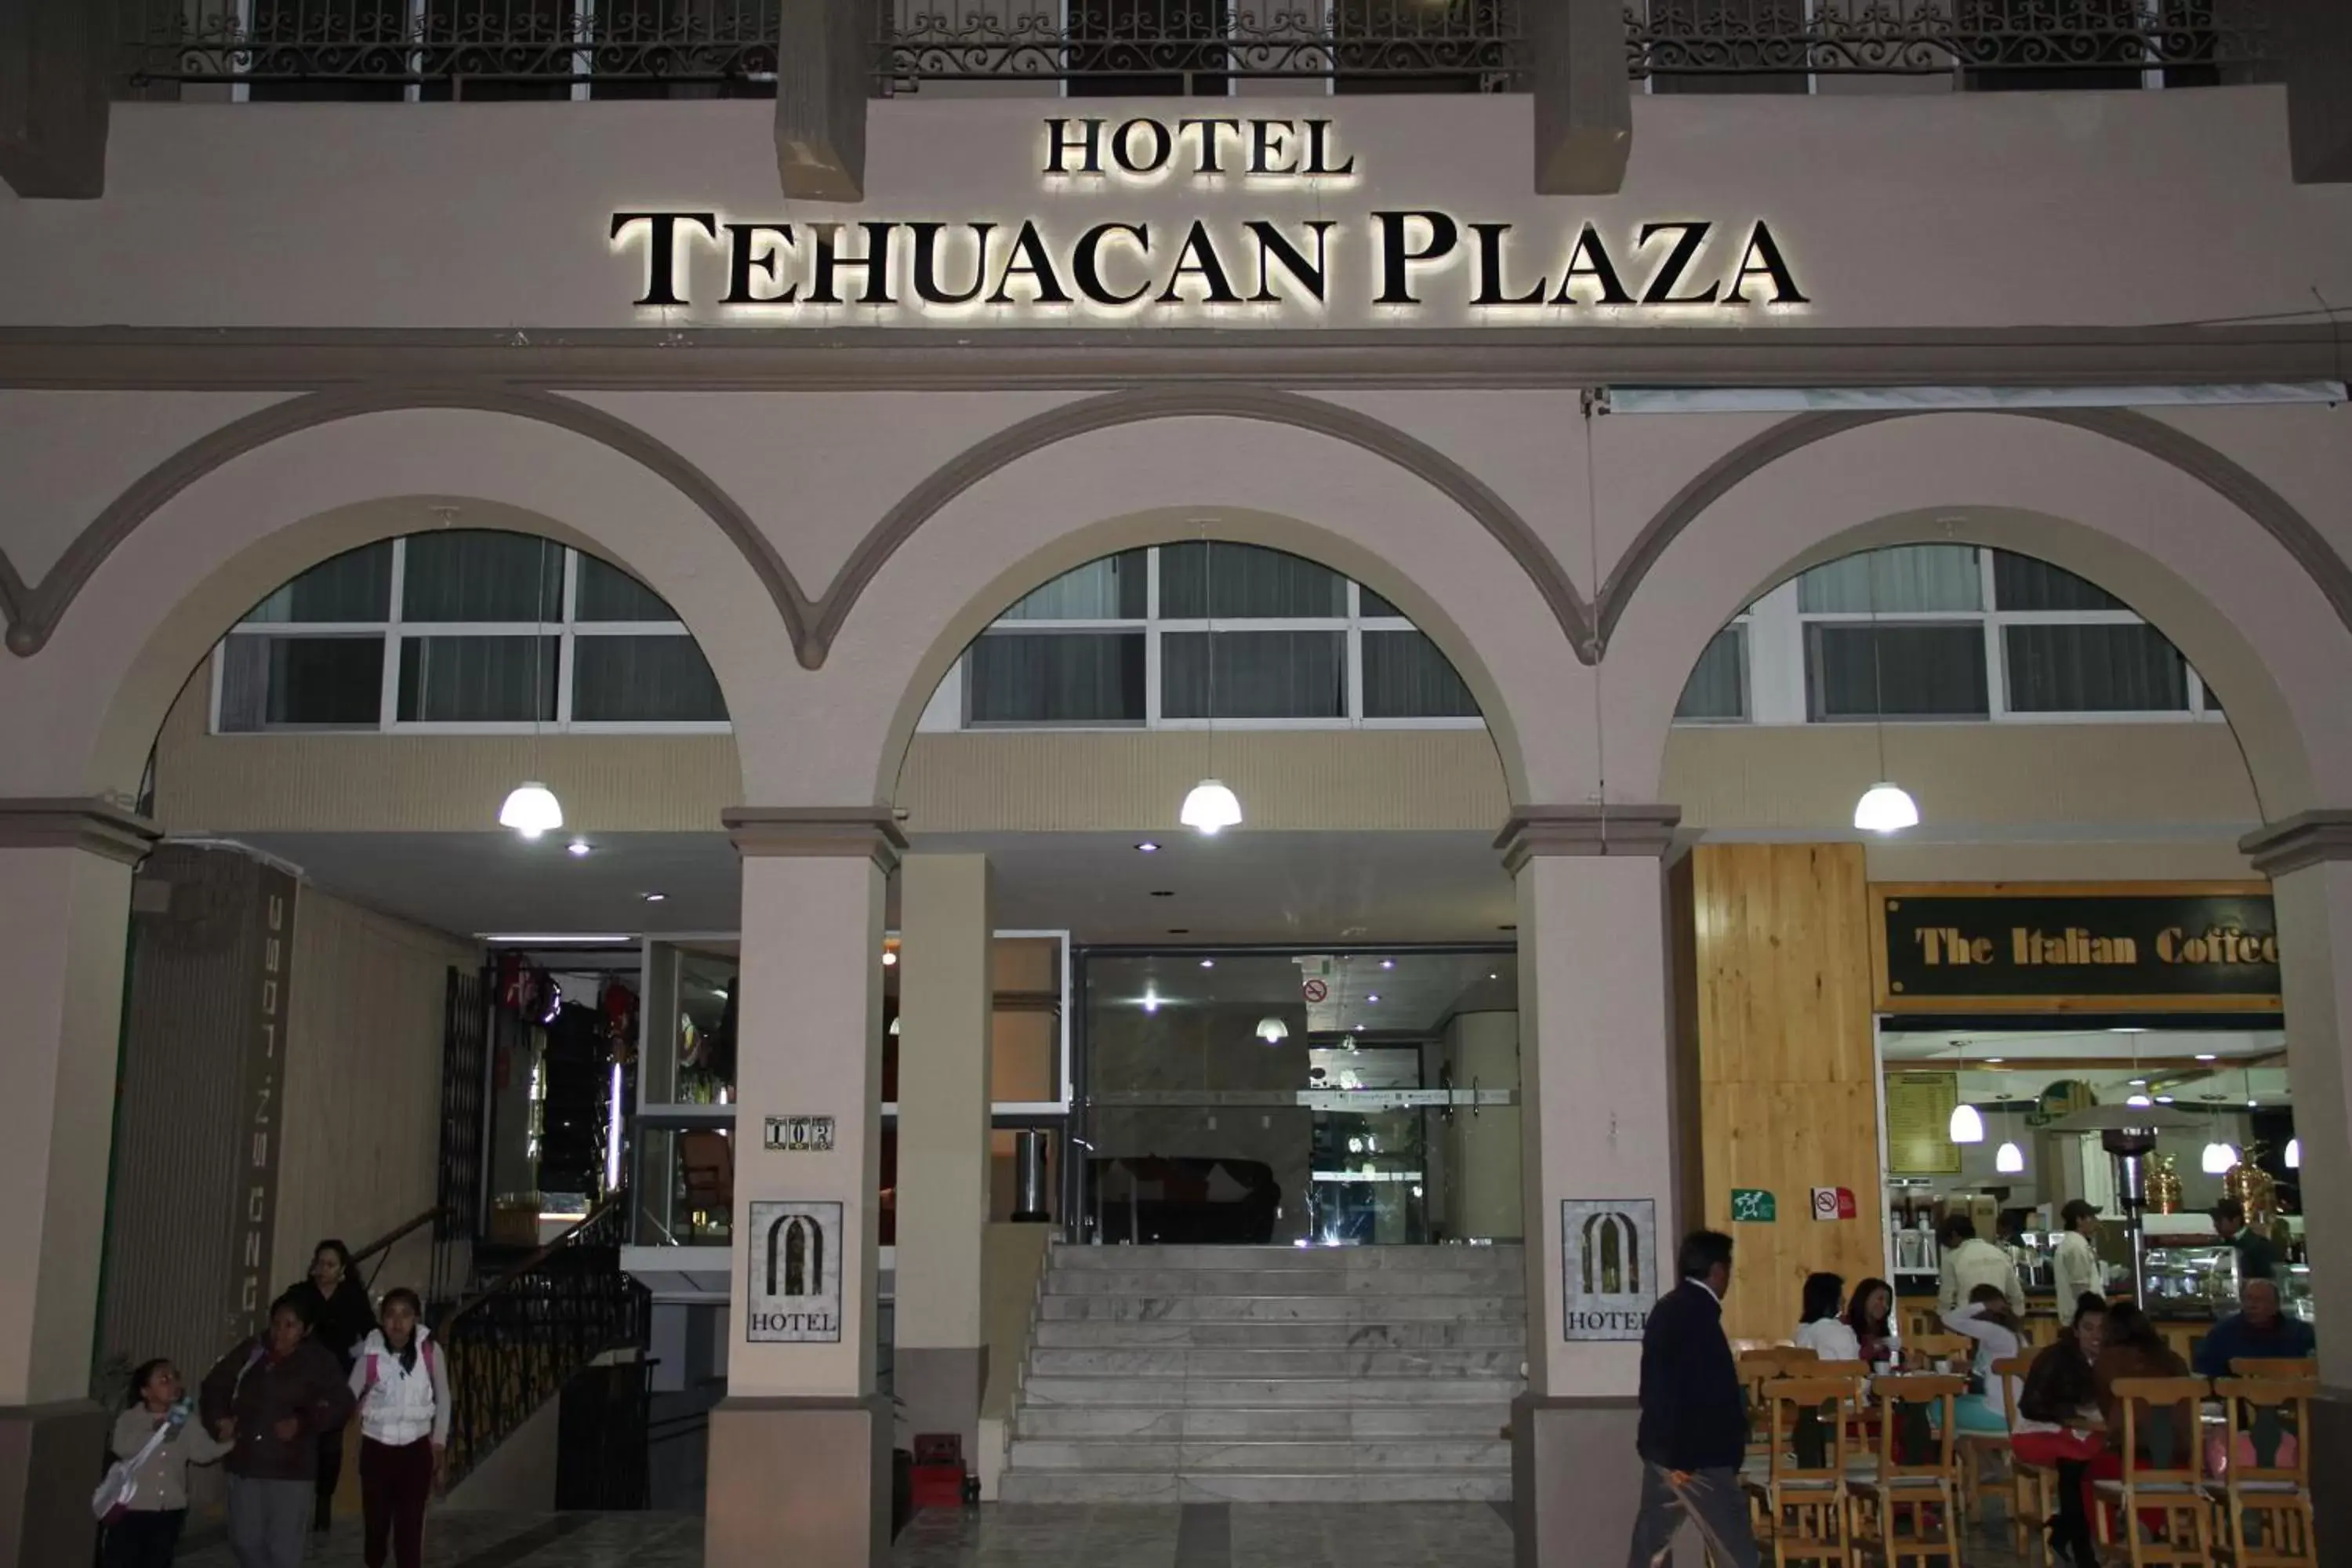 Night in Hotel Tehuacan Plaza